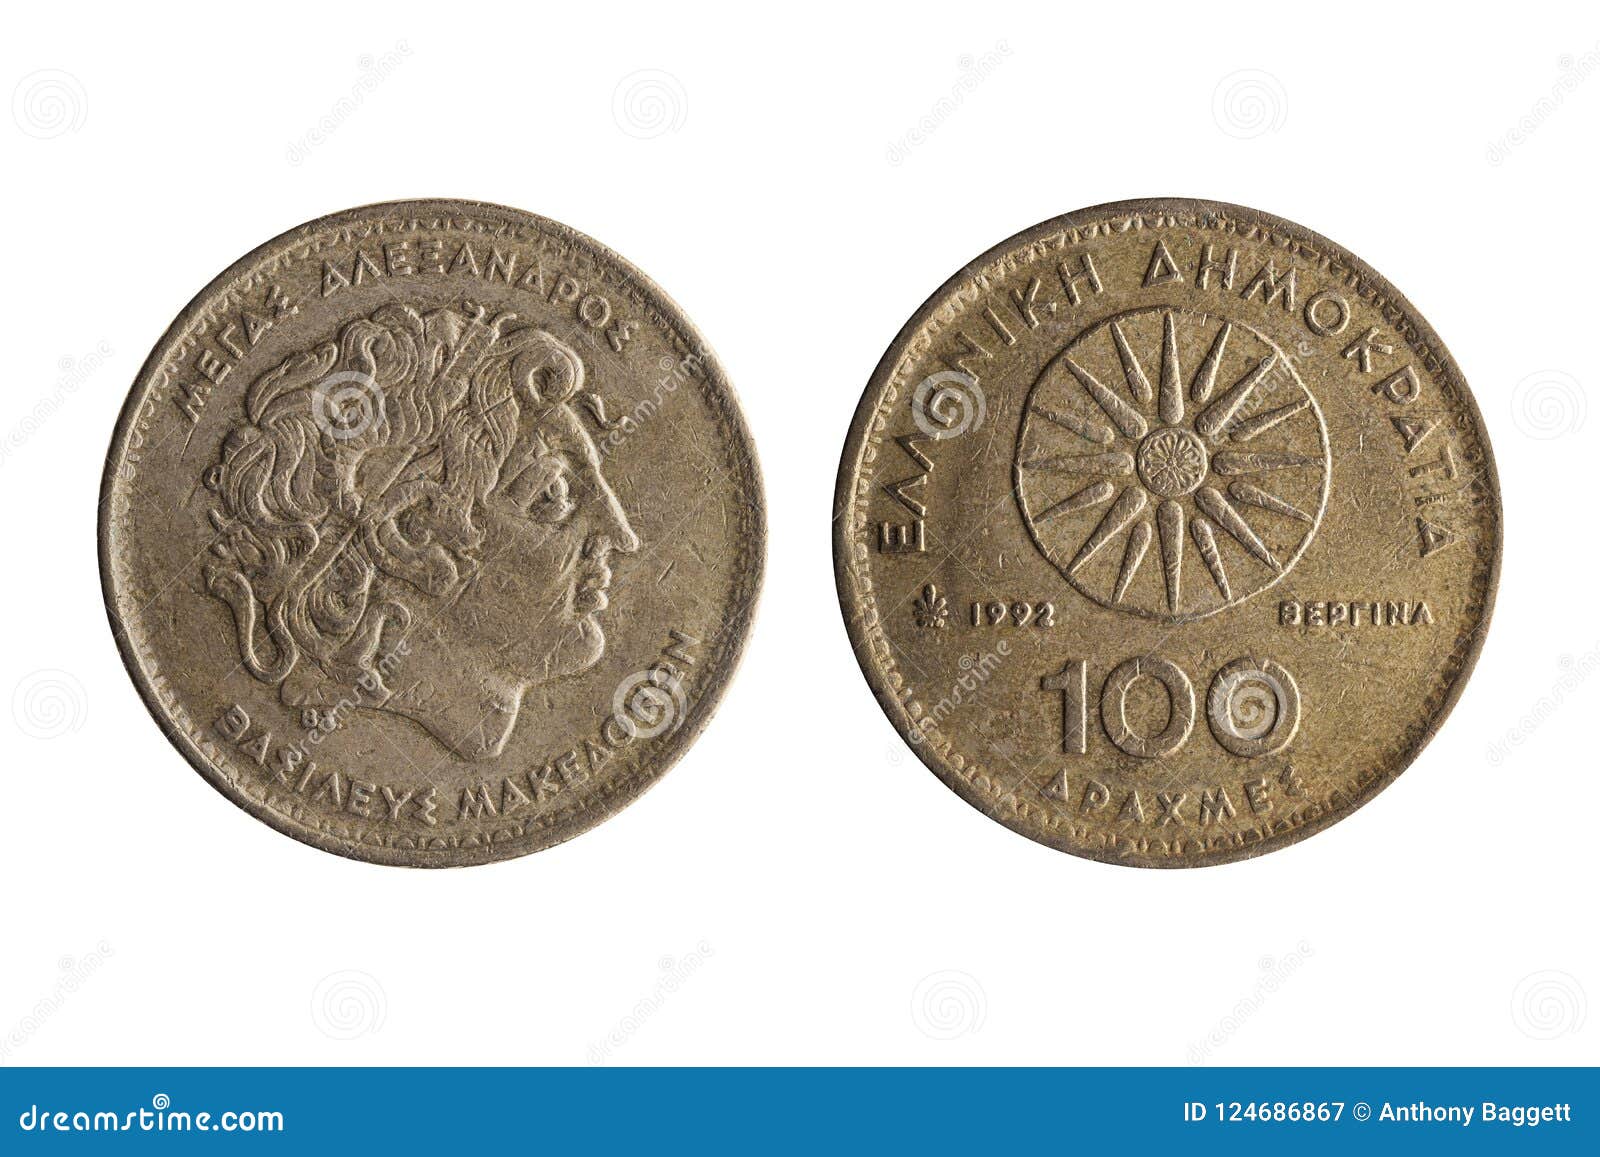 greek 100 drachmas coin dated 1992